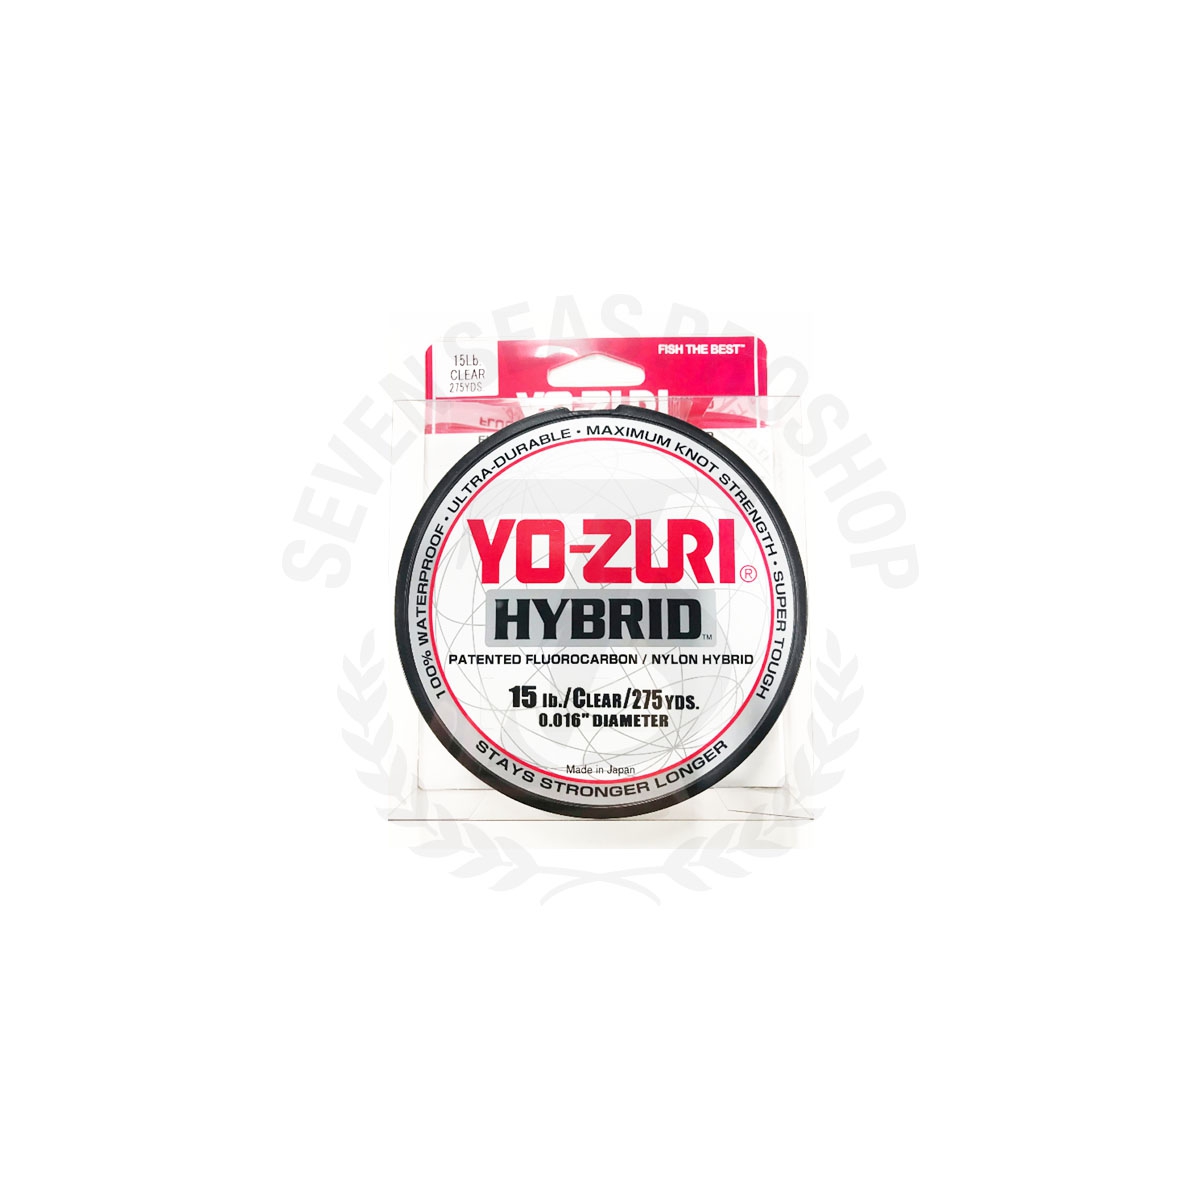 Yo-Zuri Top Hybrid Ice Line Patented Fluorocarbon/Nylon Hybrid  #R1406-CL-4lb (Clear)*สายลีดฟลูออโรคาร์บอน/ไนลอน - 7 SEAS PROSHOP (THAILAND)